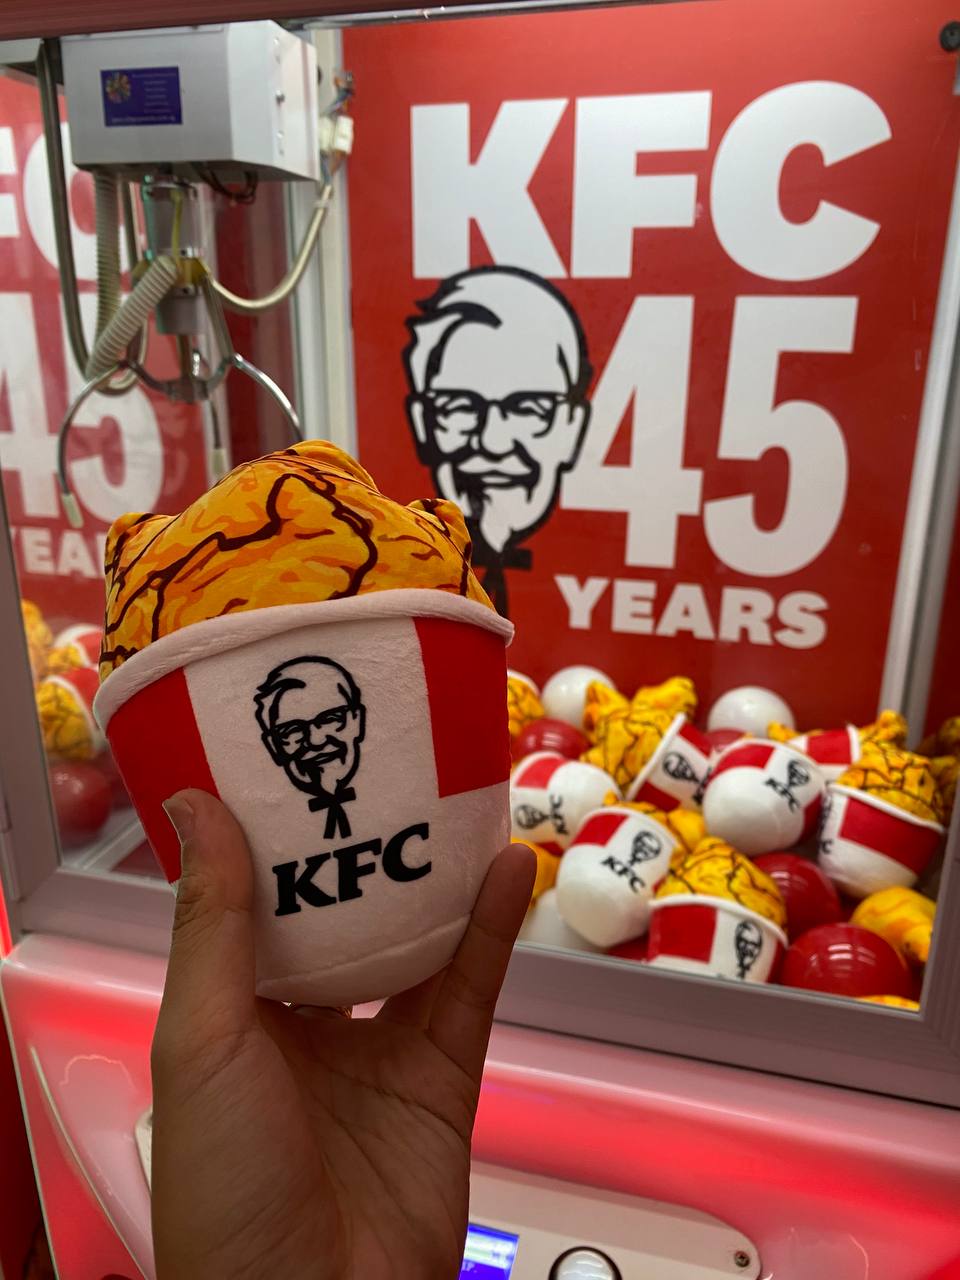 KFC pop-up vivocity - limited edition KFC plushies